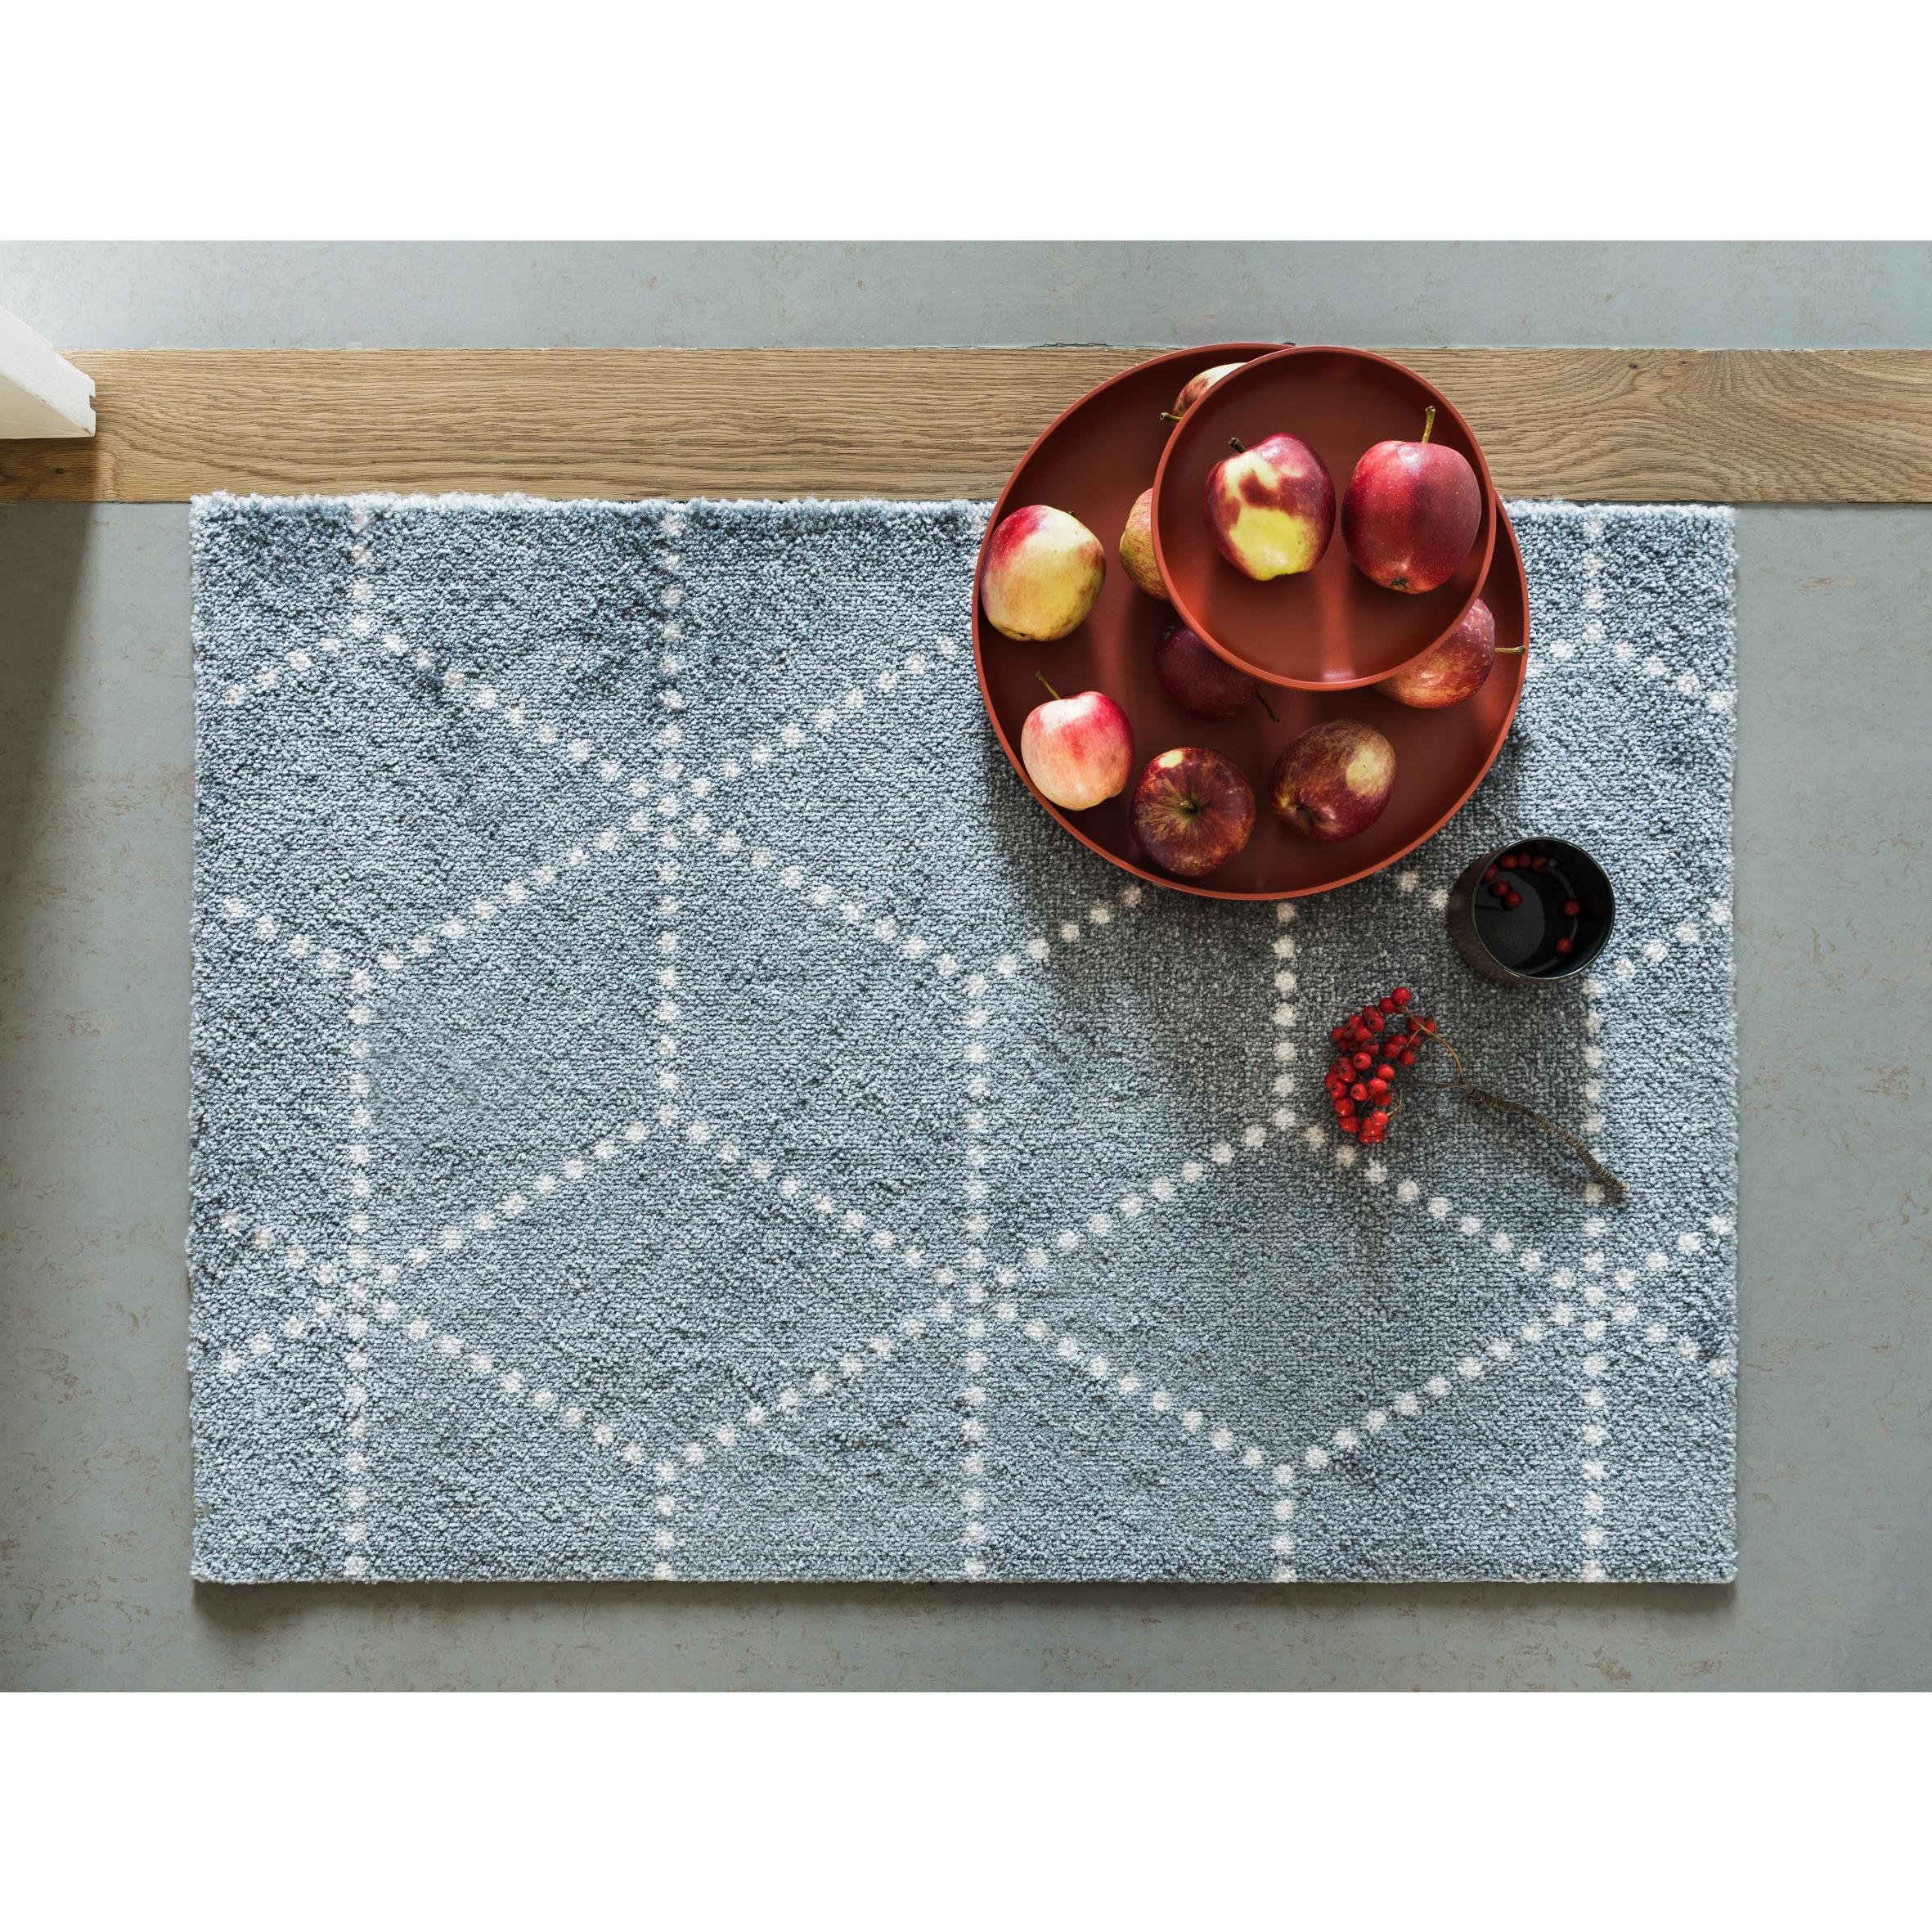 Heymat Doormat Hagl Silver, 60x85 cm